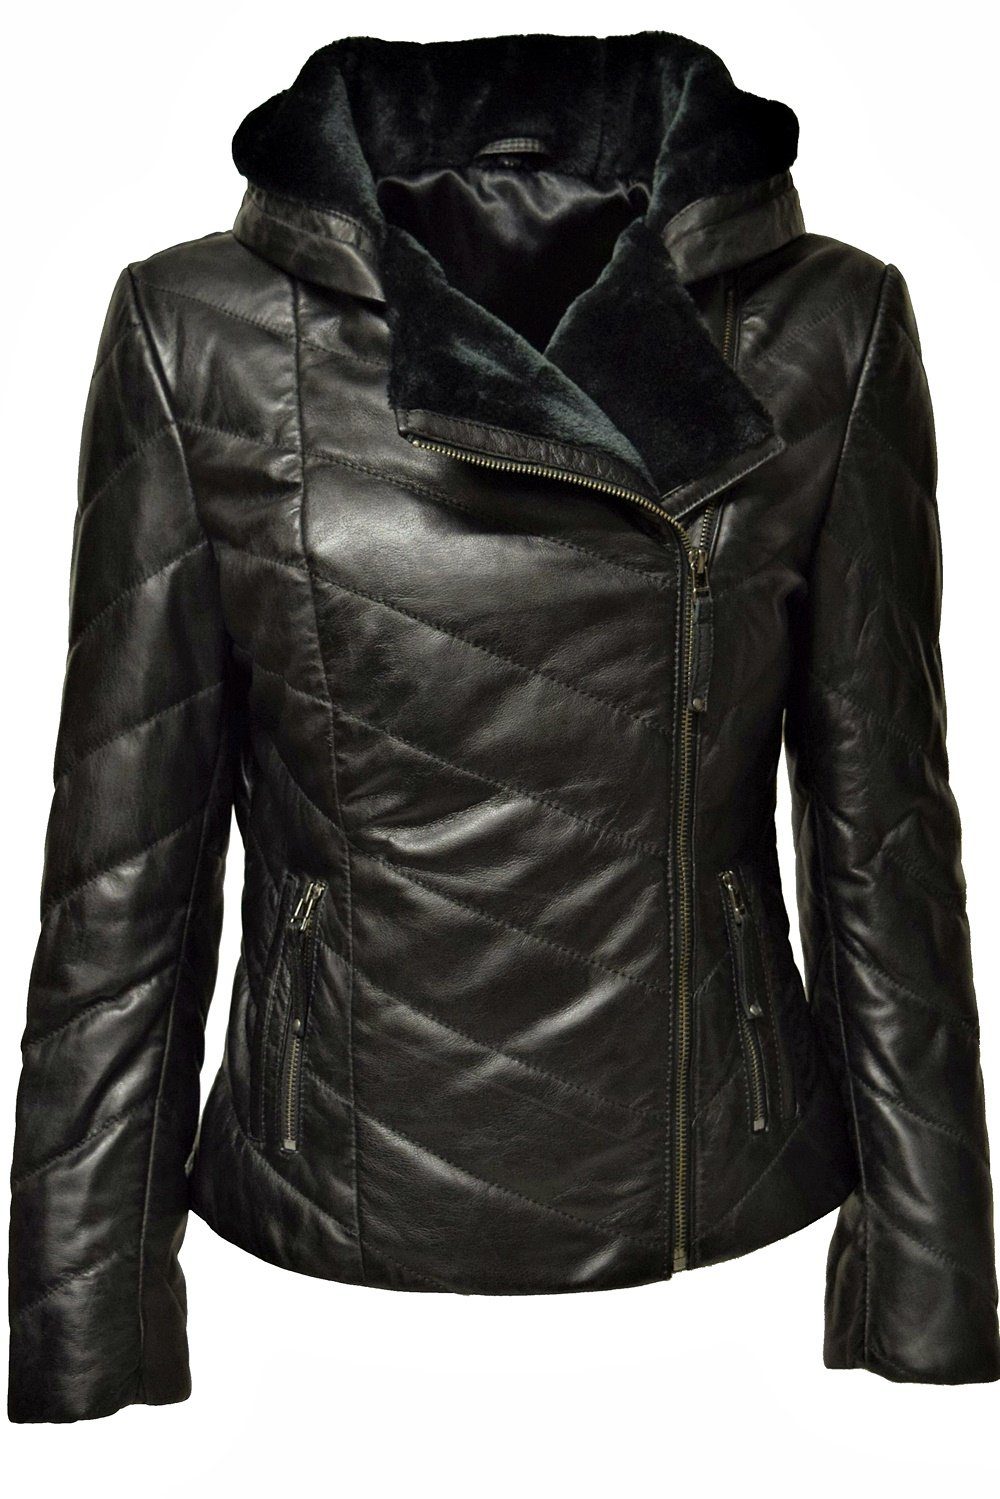 Zimmert Leather Lederjacke Mariella Stepp-Lederjacke aus weichem Leder mit Kapuze Schwarz